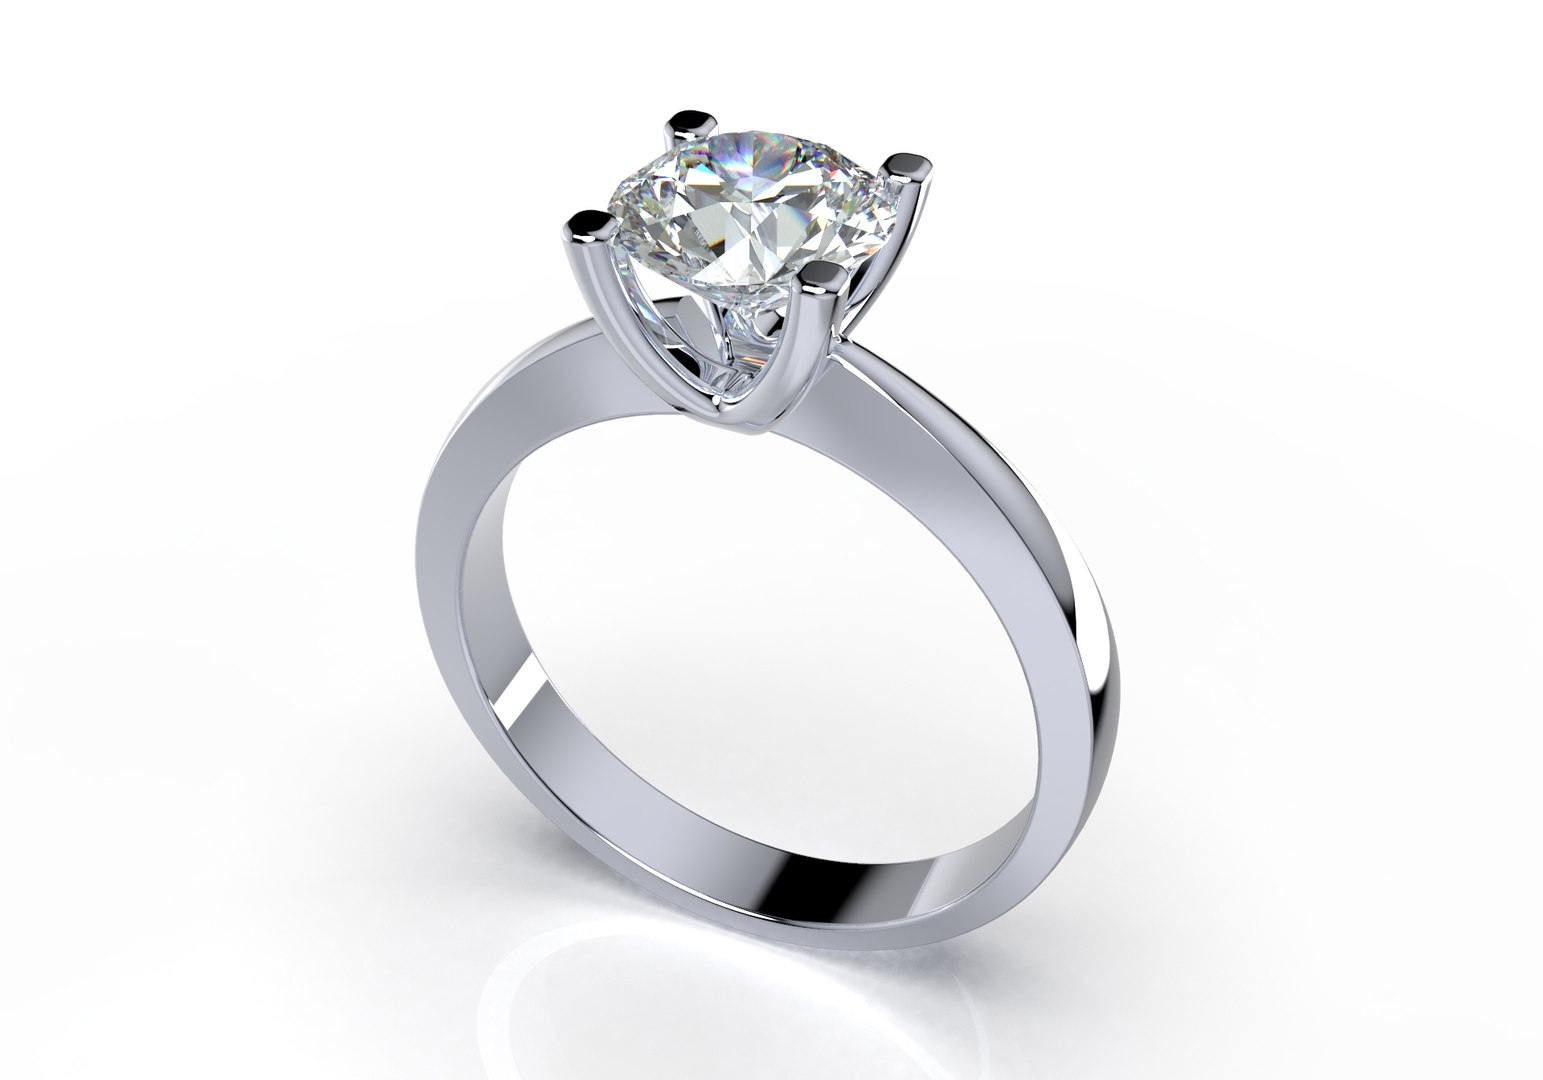 jewelry cad design tutorial #02 | Gold ring design 2021 - YouTube | Gold ring  designs, Cad design, Ring designs